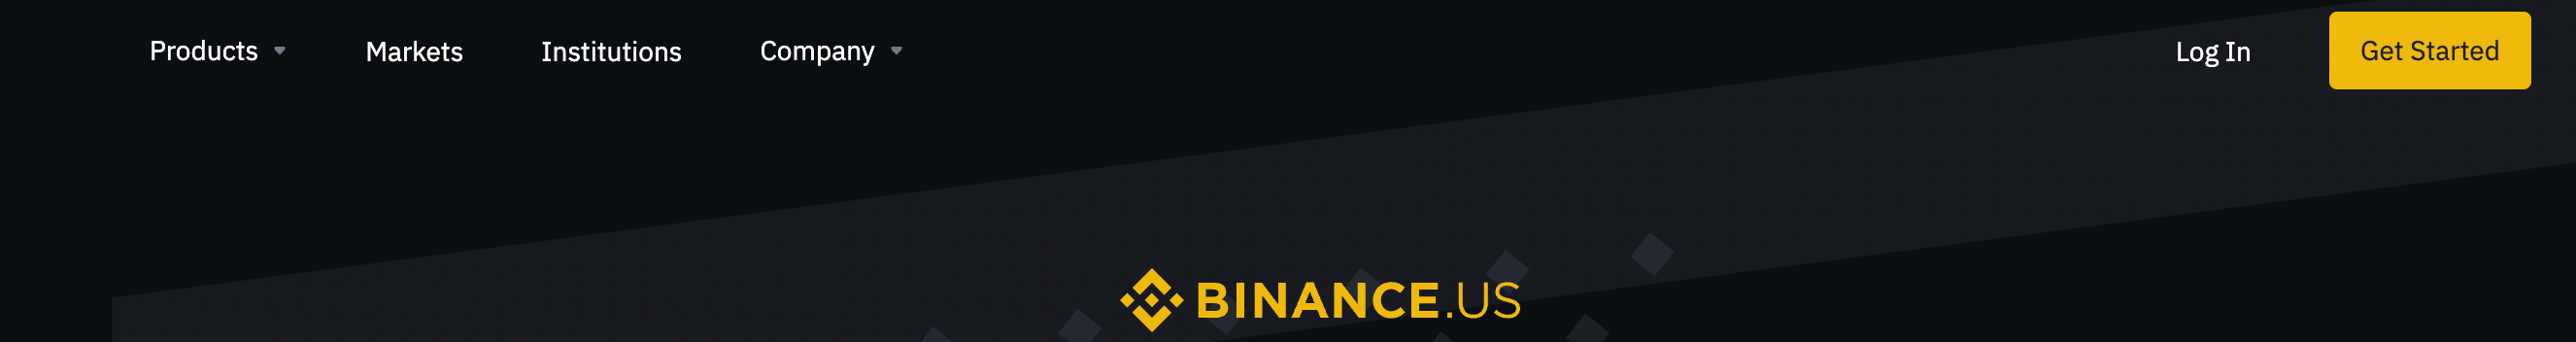 Binance US homepage